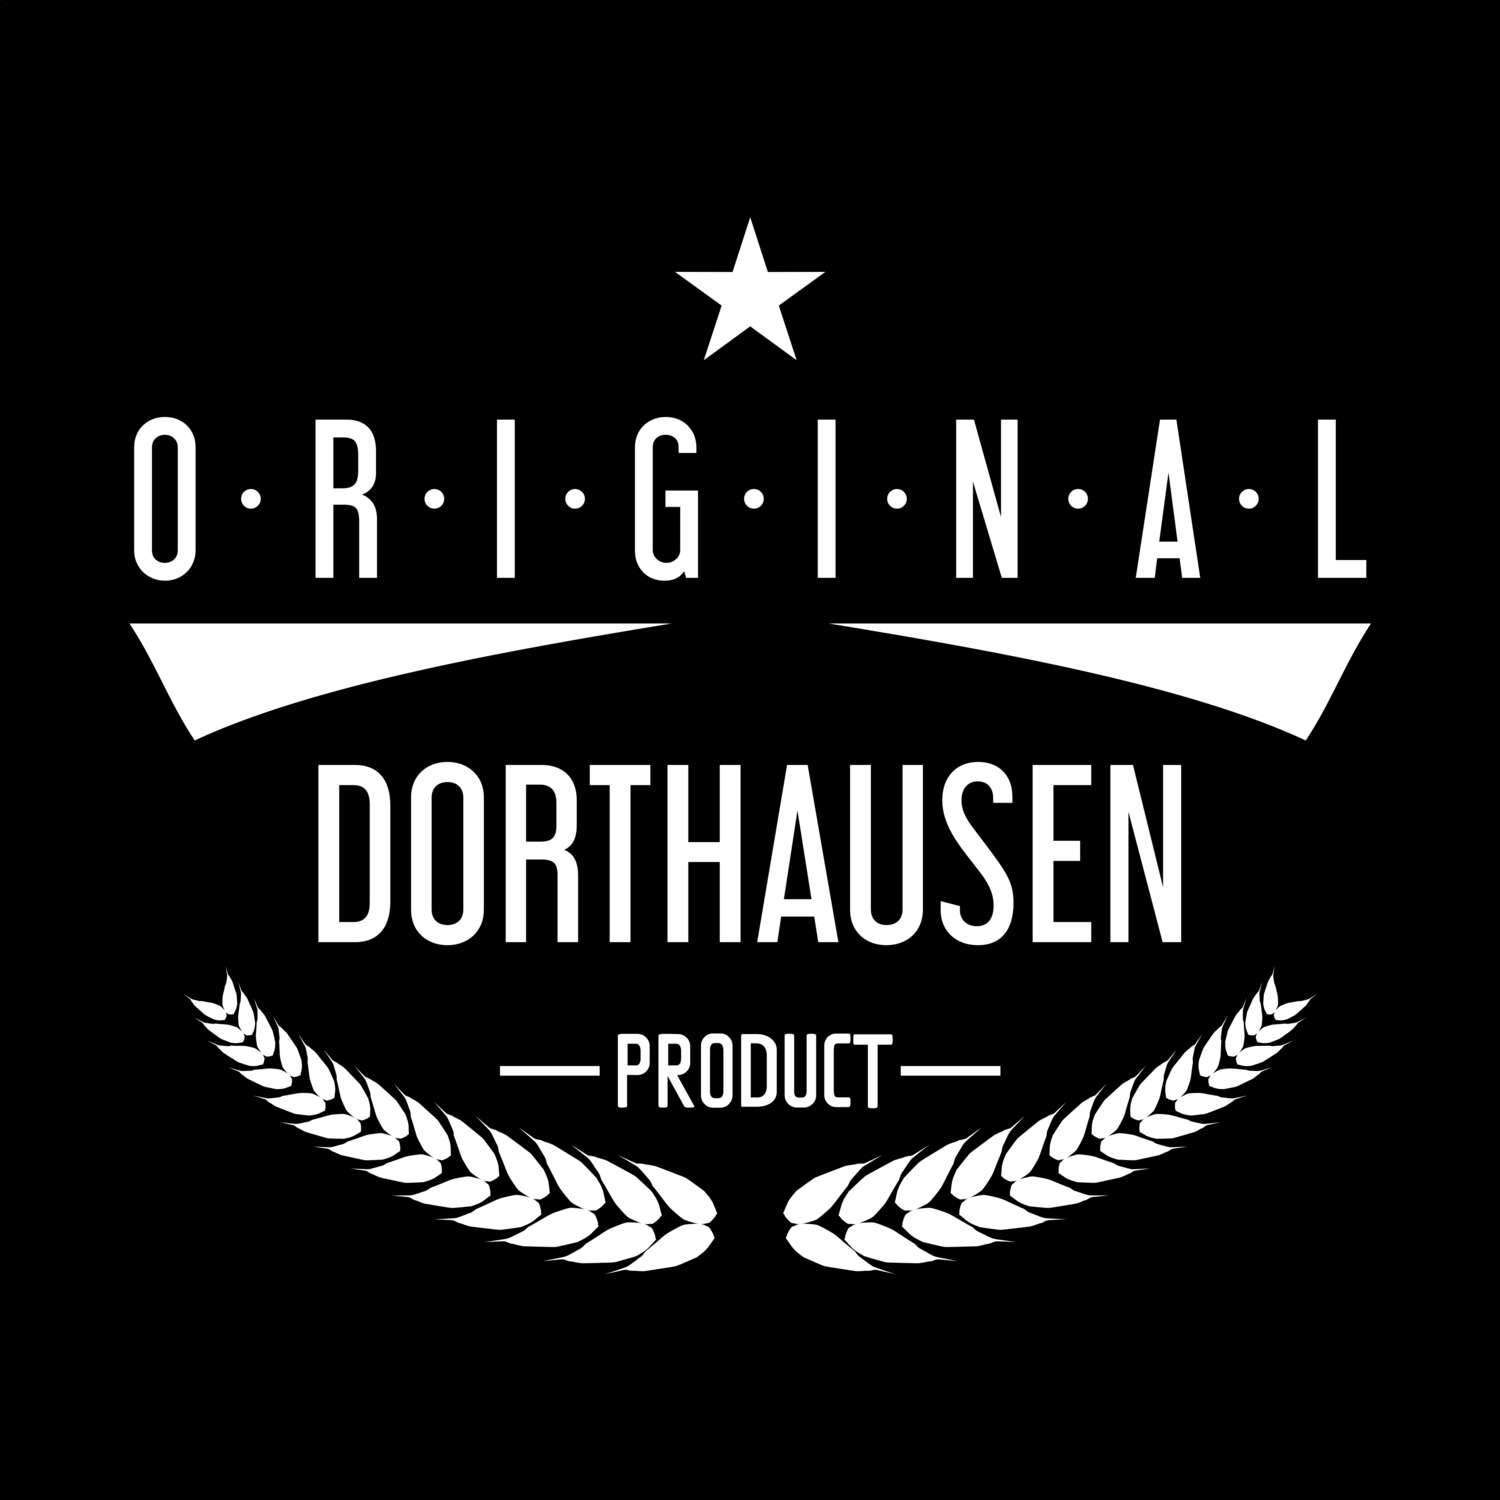 Dorthausen T-Shirt »Original Product«